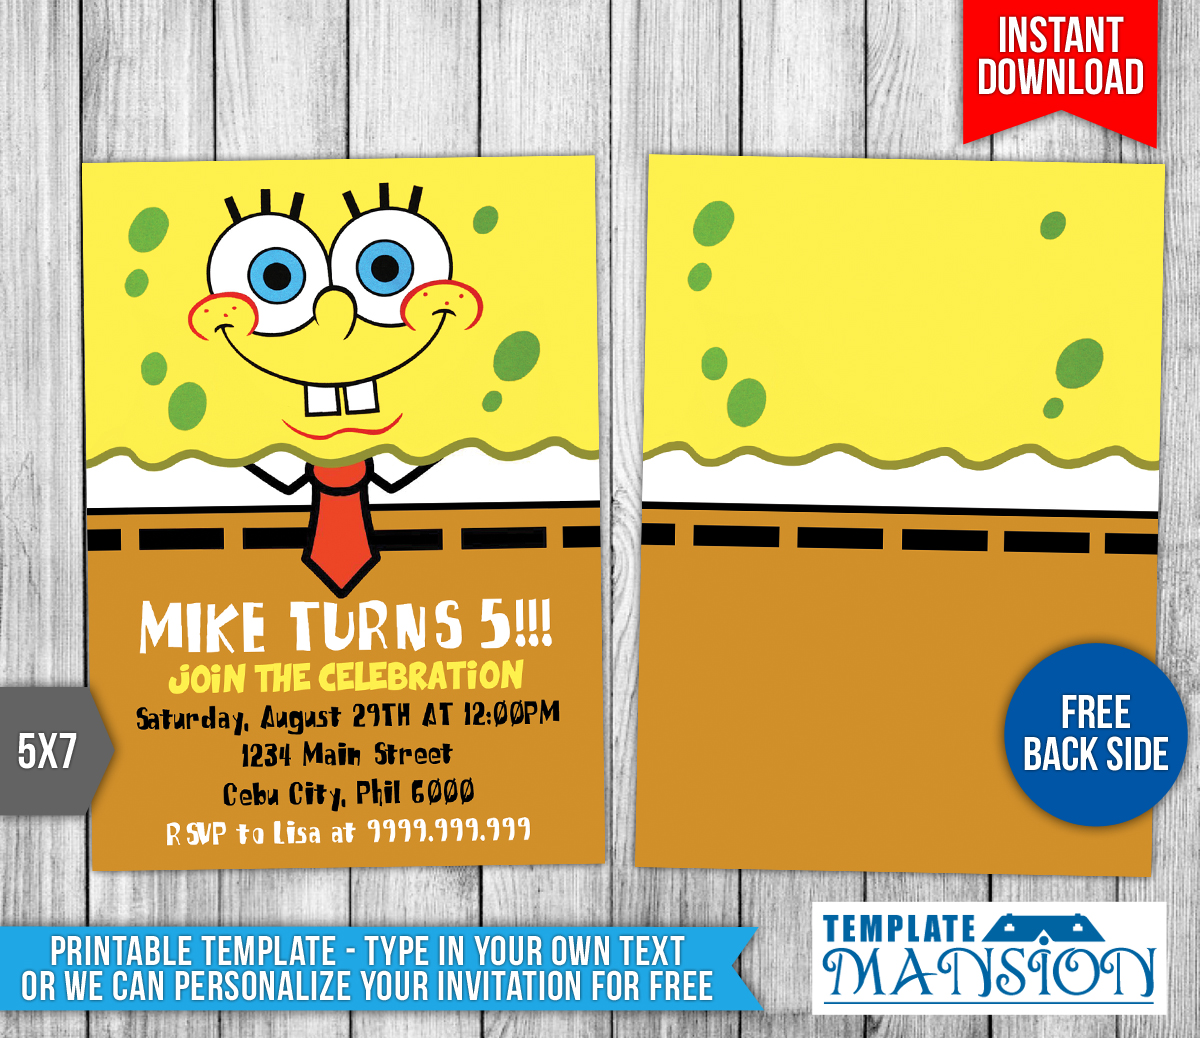 spongebob-squarepants-birthday-invitation-1-by-templatemansion-on-deviantart